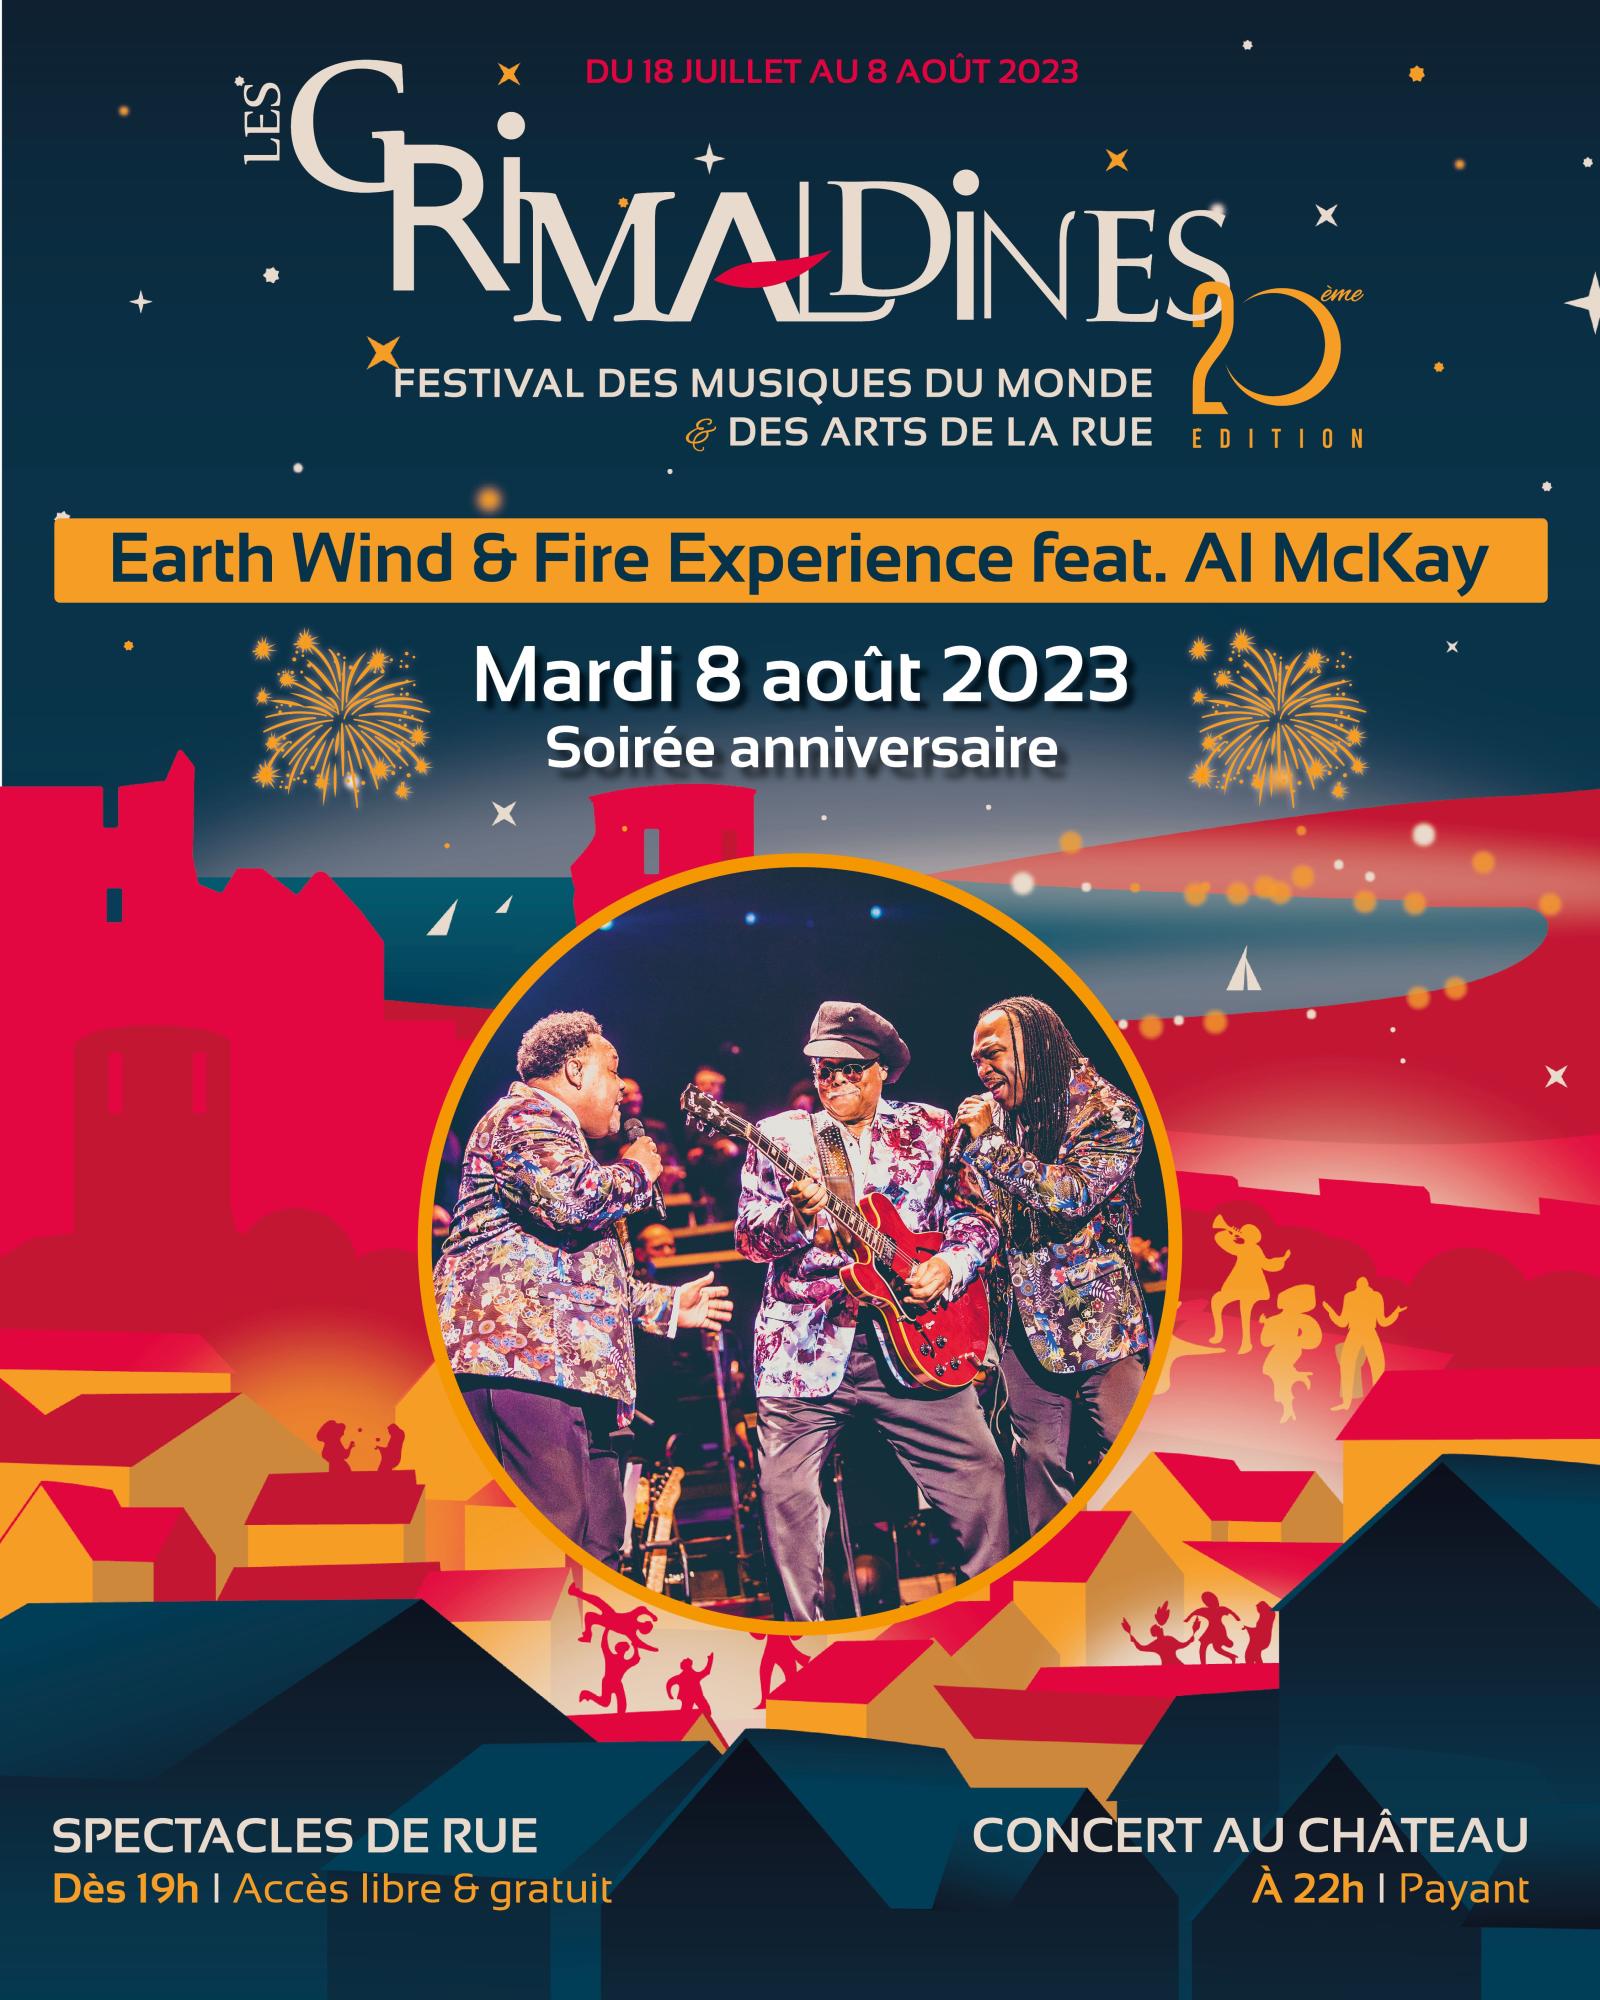 Mardi 08 août 2023 - Les Grimaldines avec Earth Wind and Fire feat Al McKay 